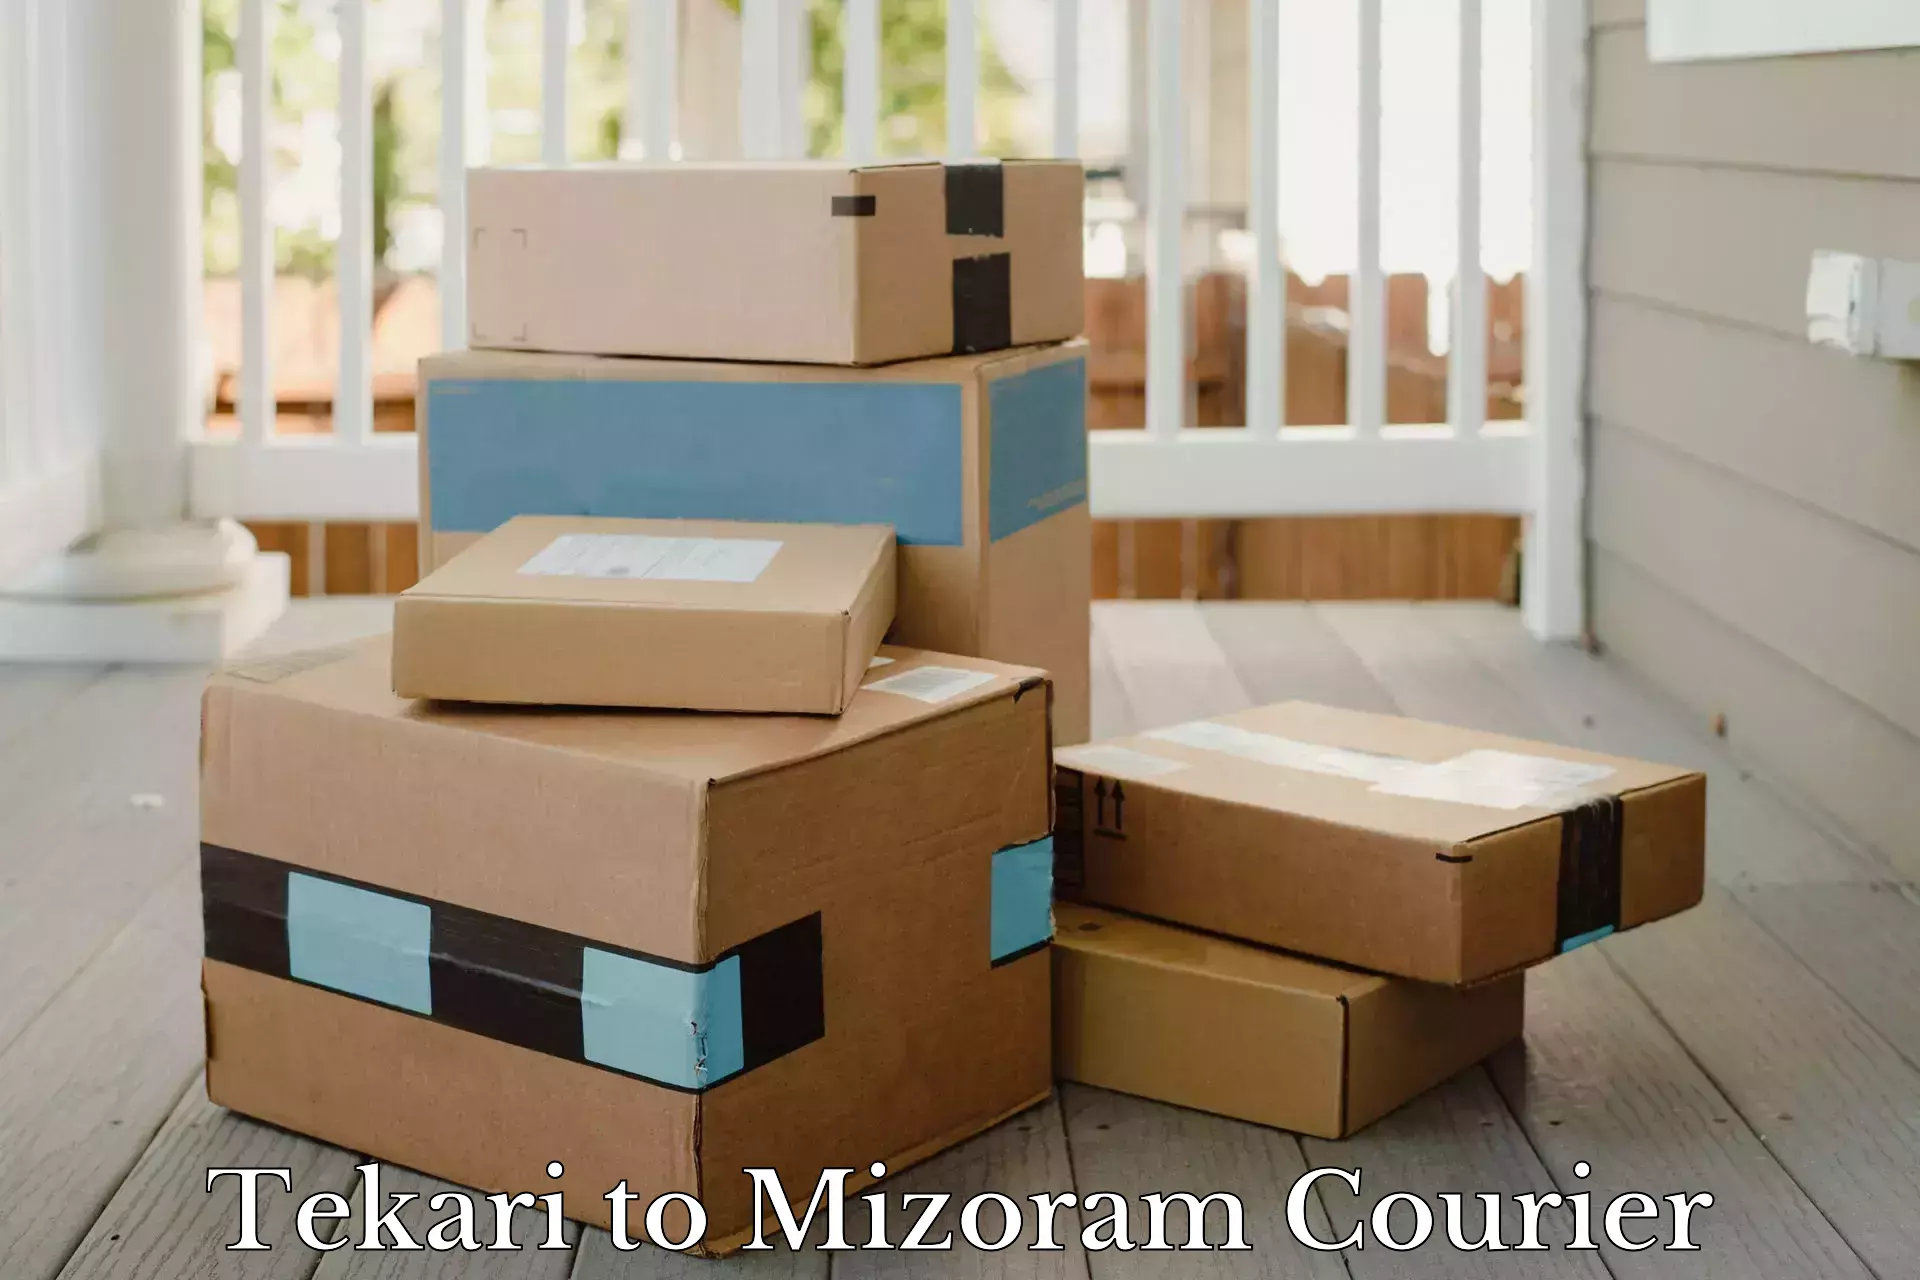 Reliable courier service Tekari to Mizoram